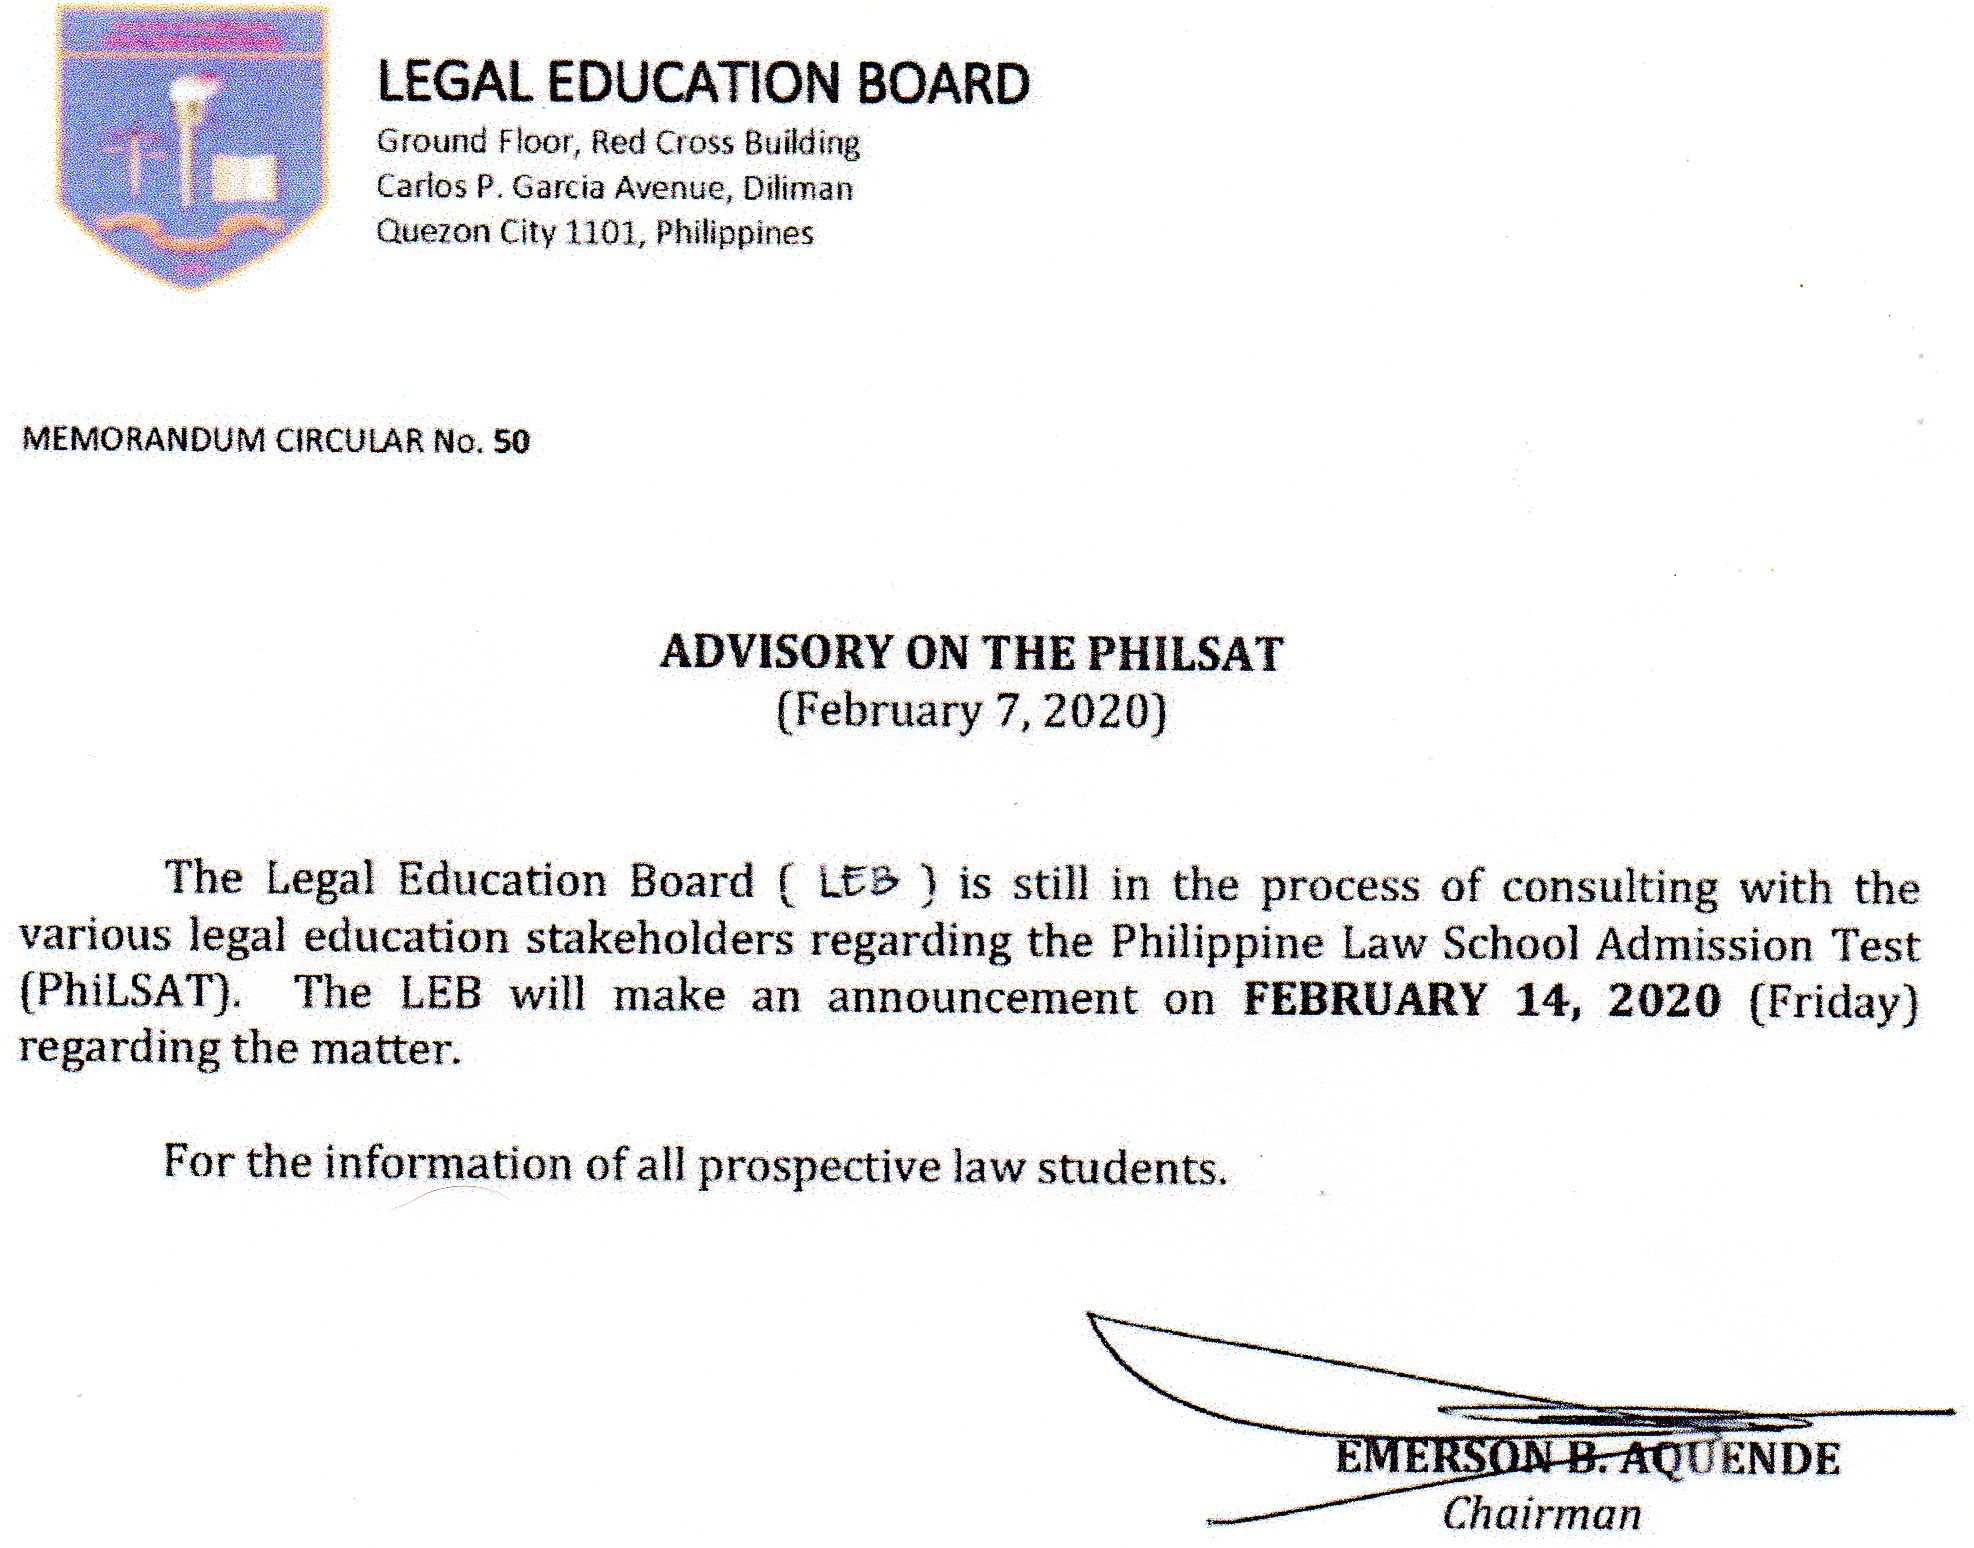 Legal Education Board’s Advisory Re: PhiLSAT Memorandum Circular No. 50